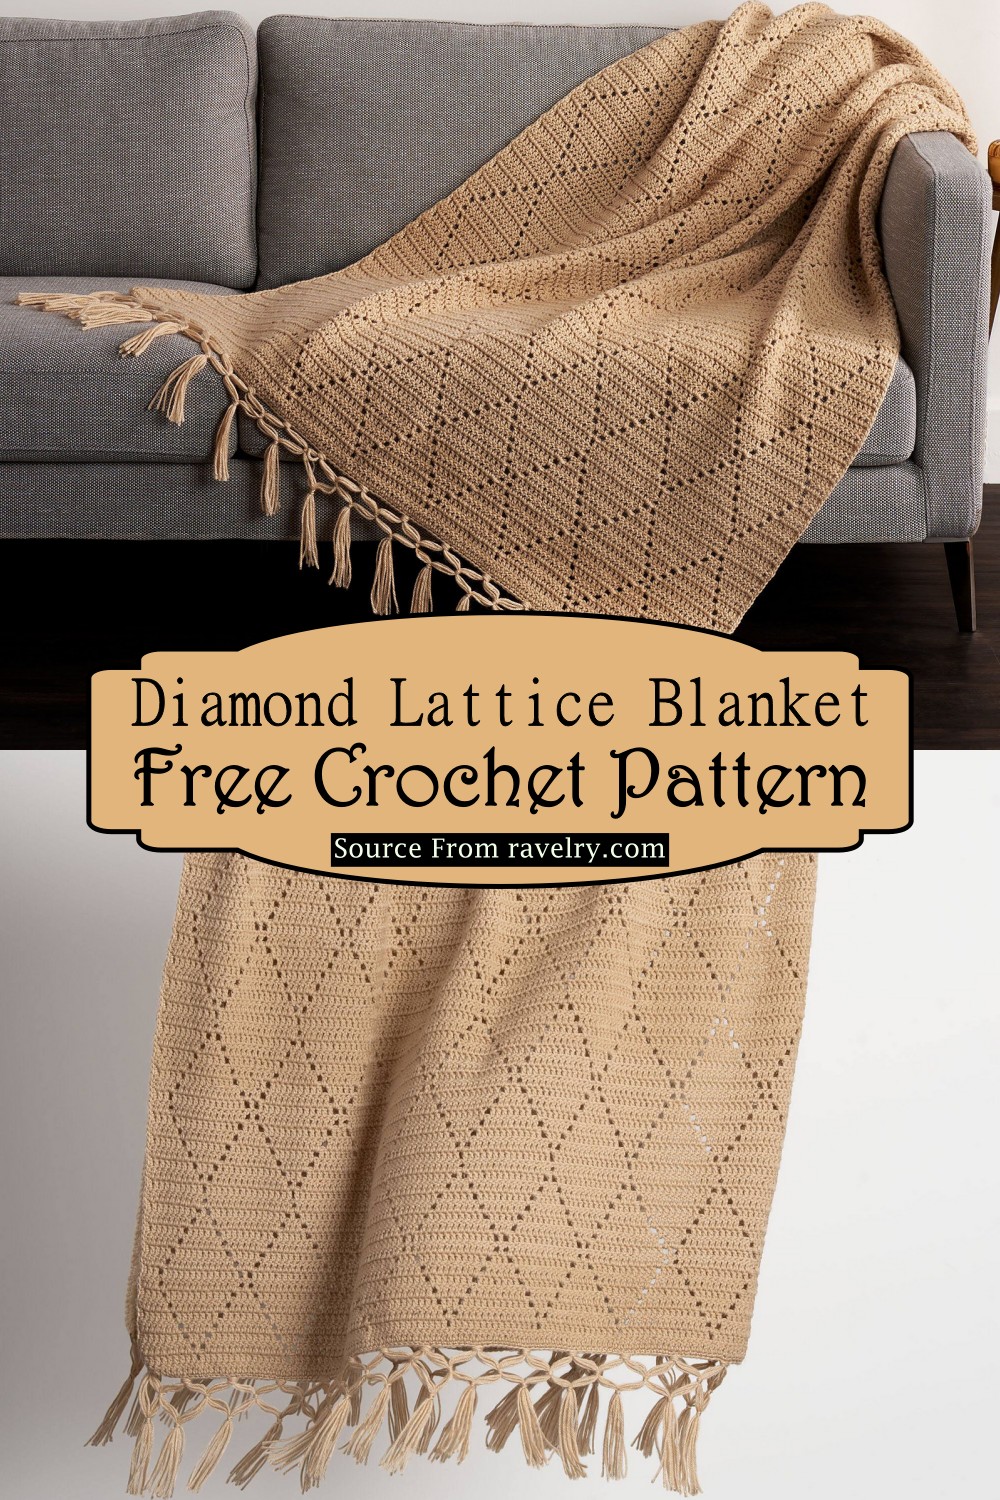 Diamond Lattice Blanket